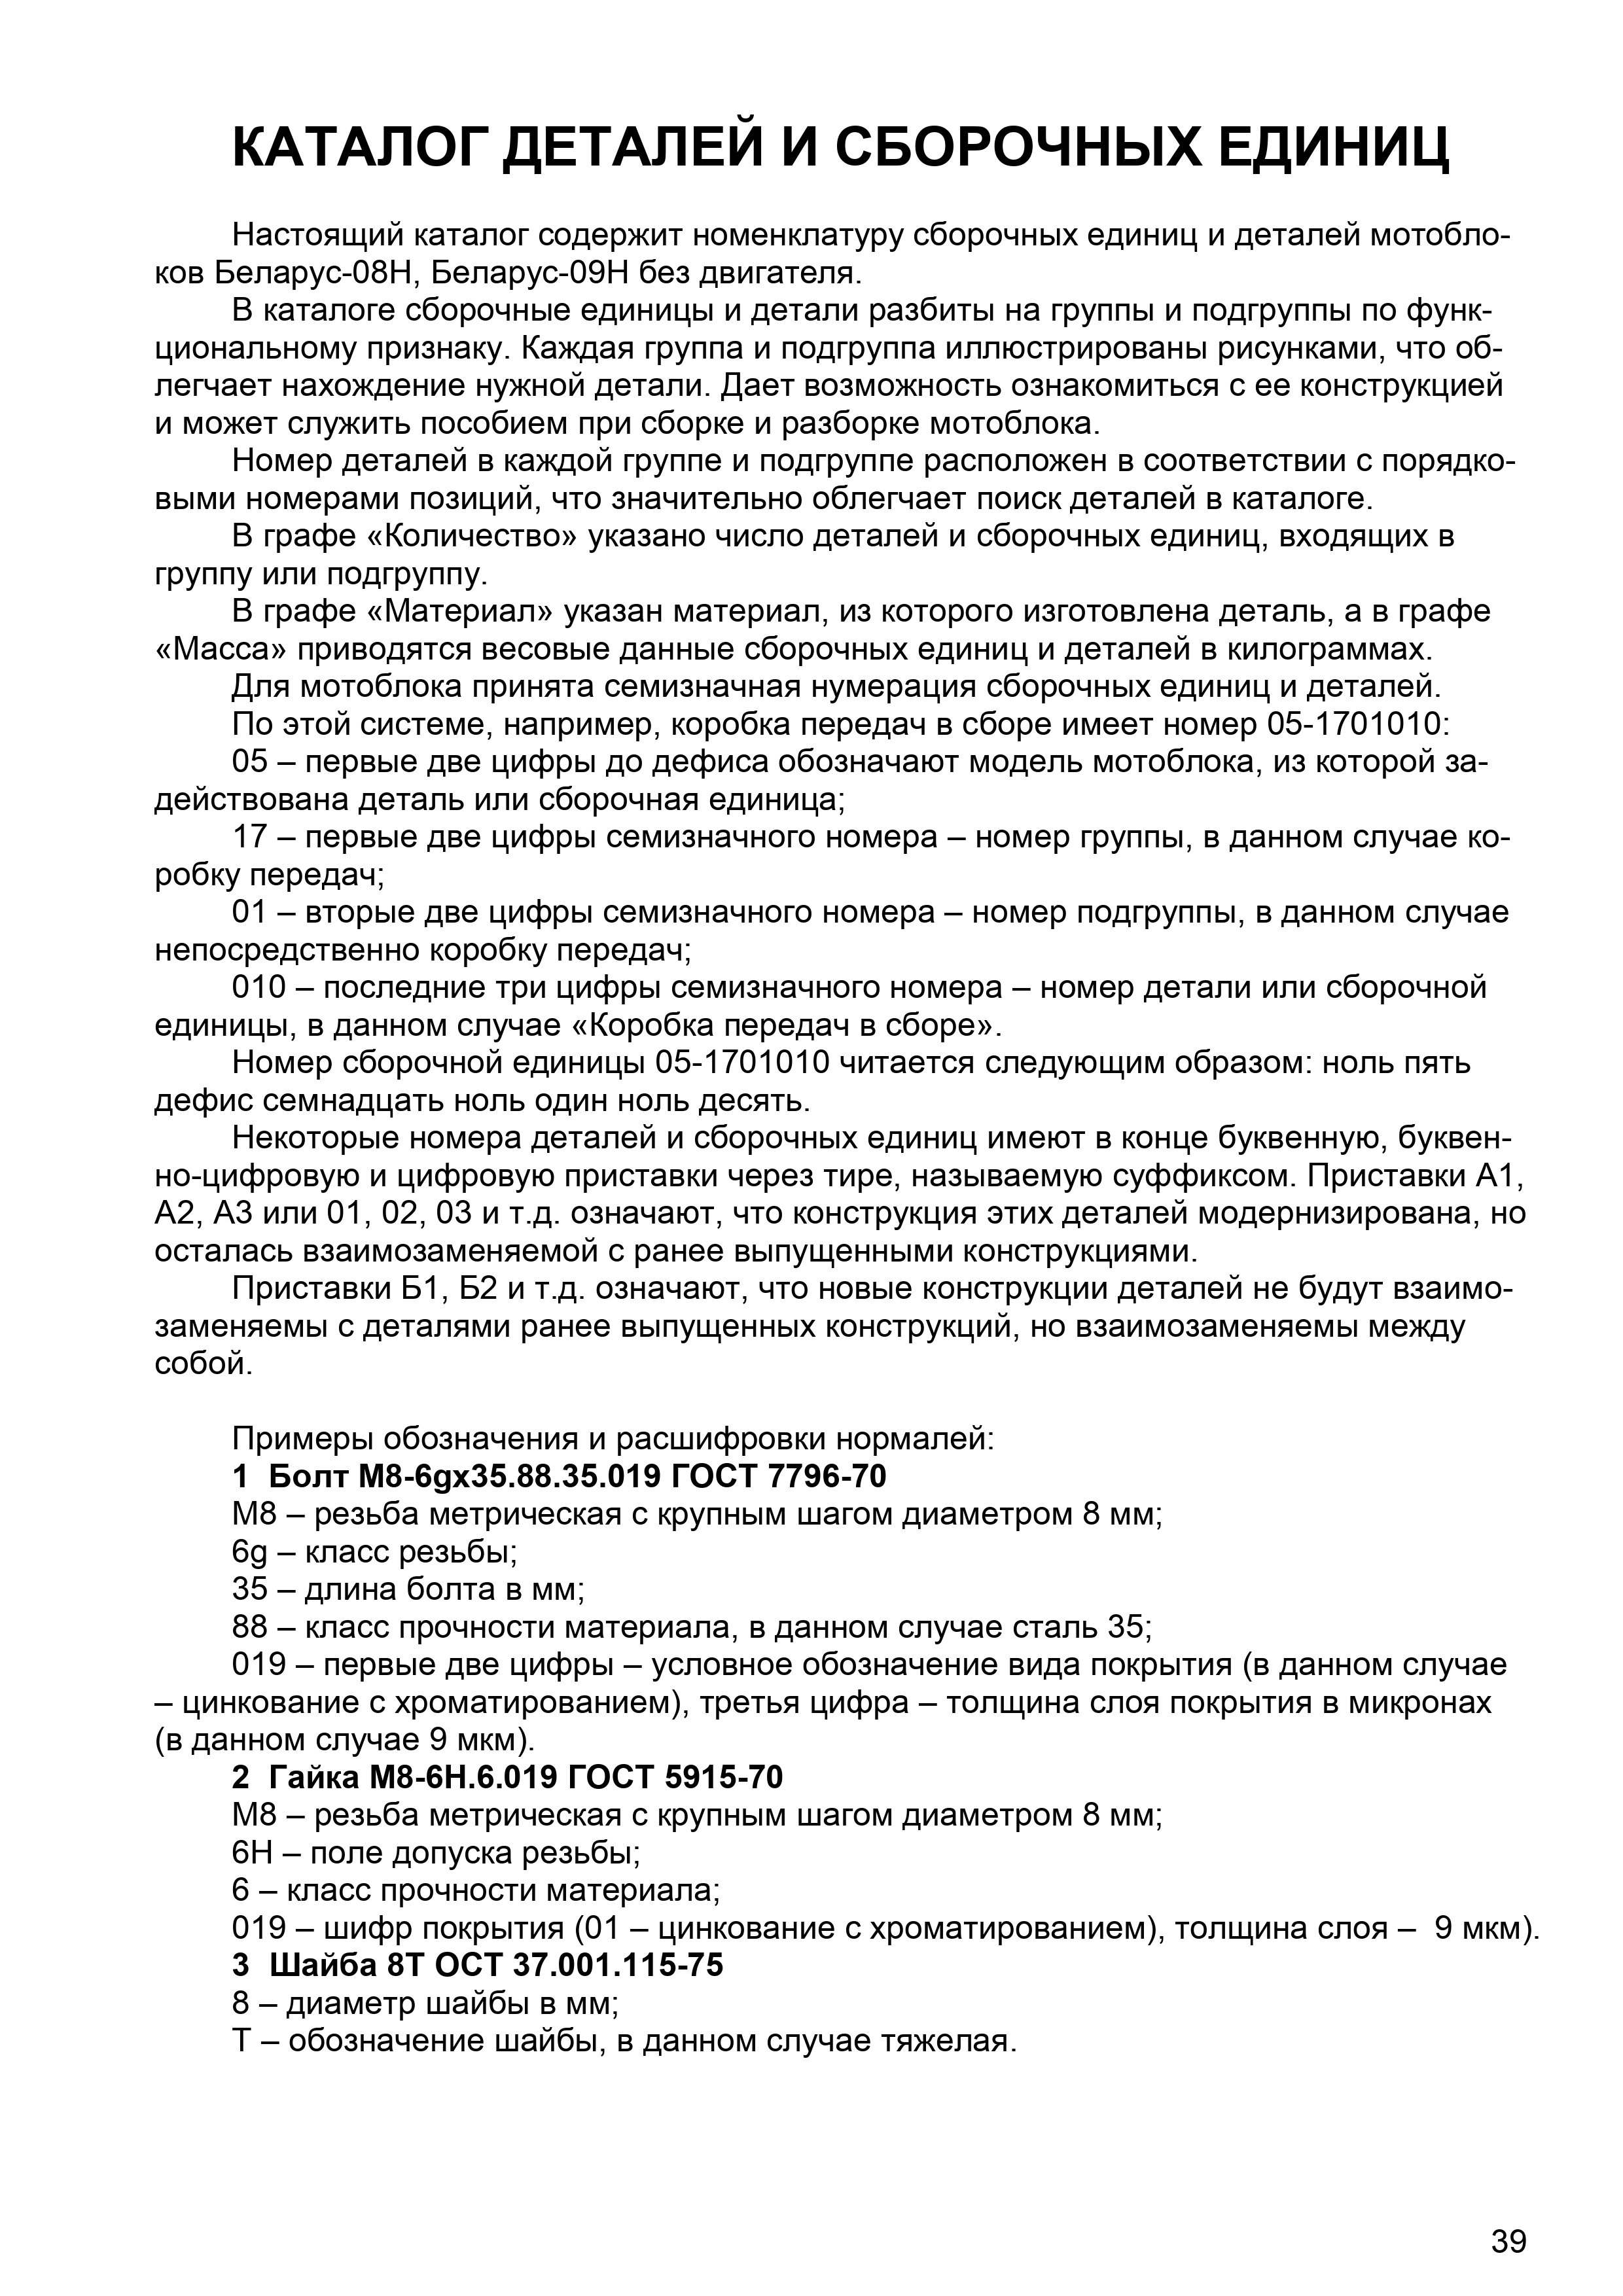 belarus_09h_manual i catalog (1)_page-0039